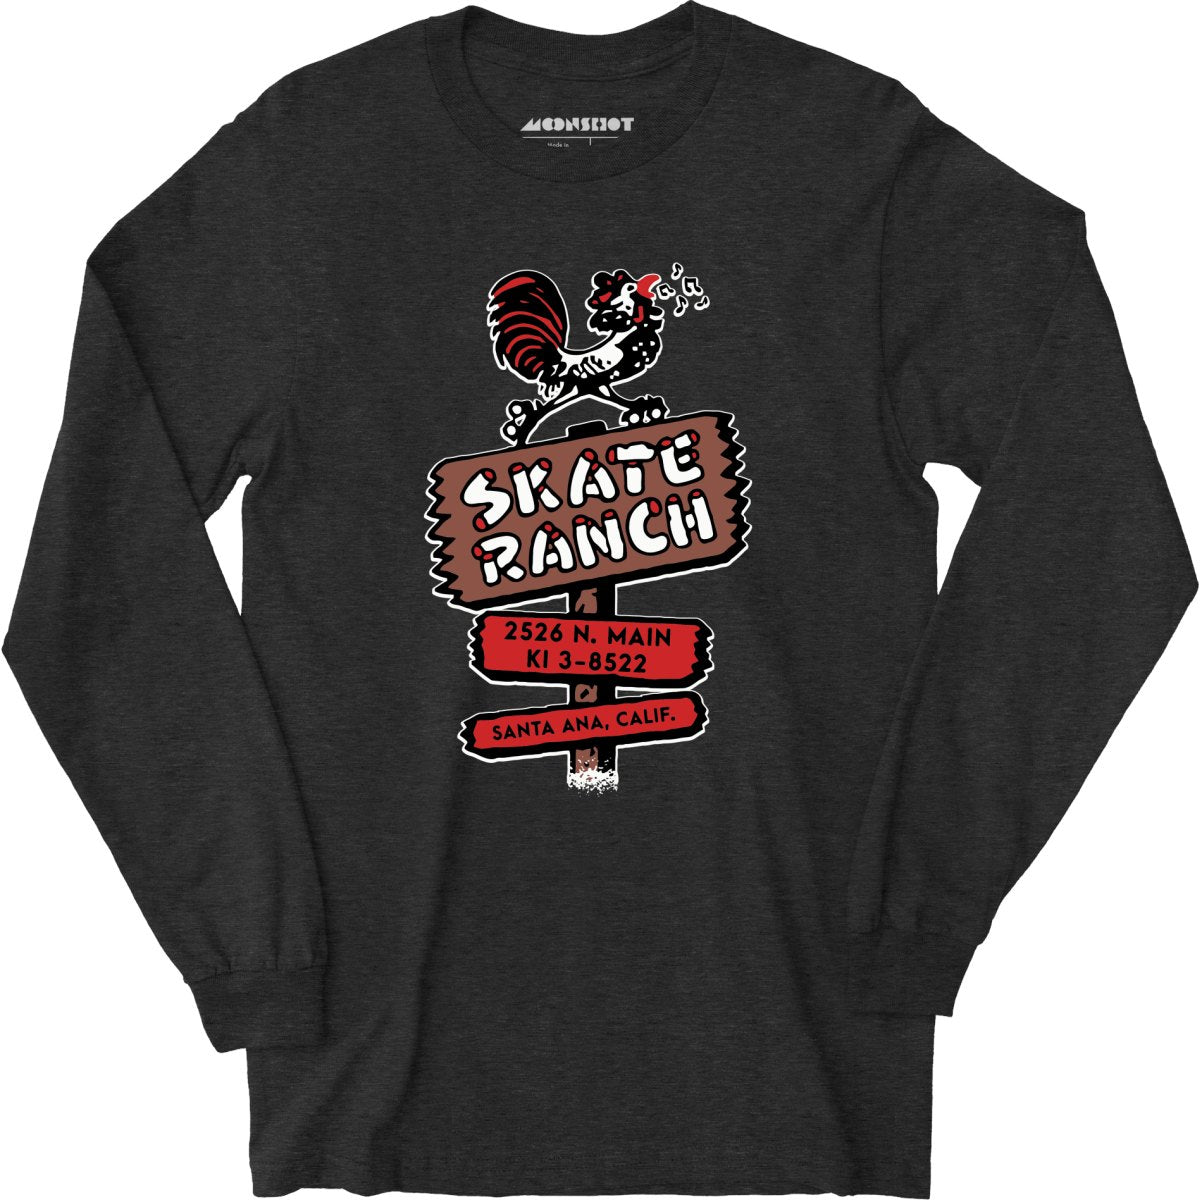 Skate Ranch - Santa Ana, CA - Vintage Roller Rink - Long Sleeve T-Shirt